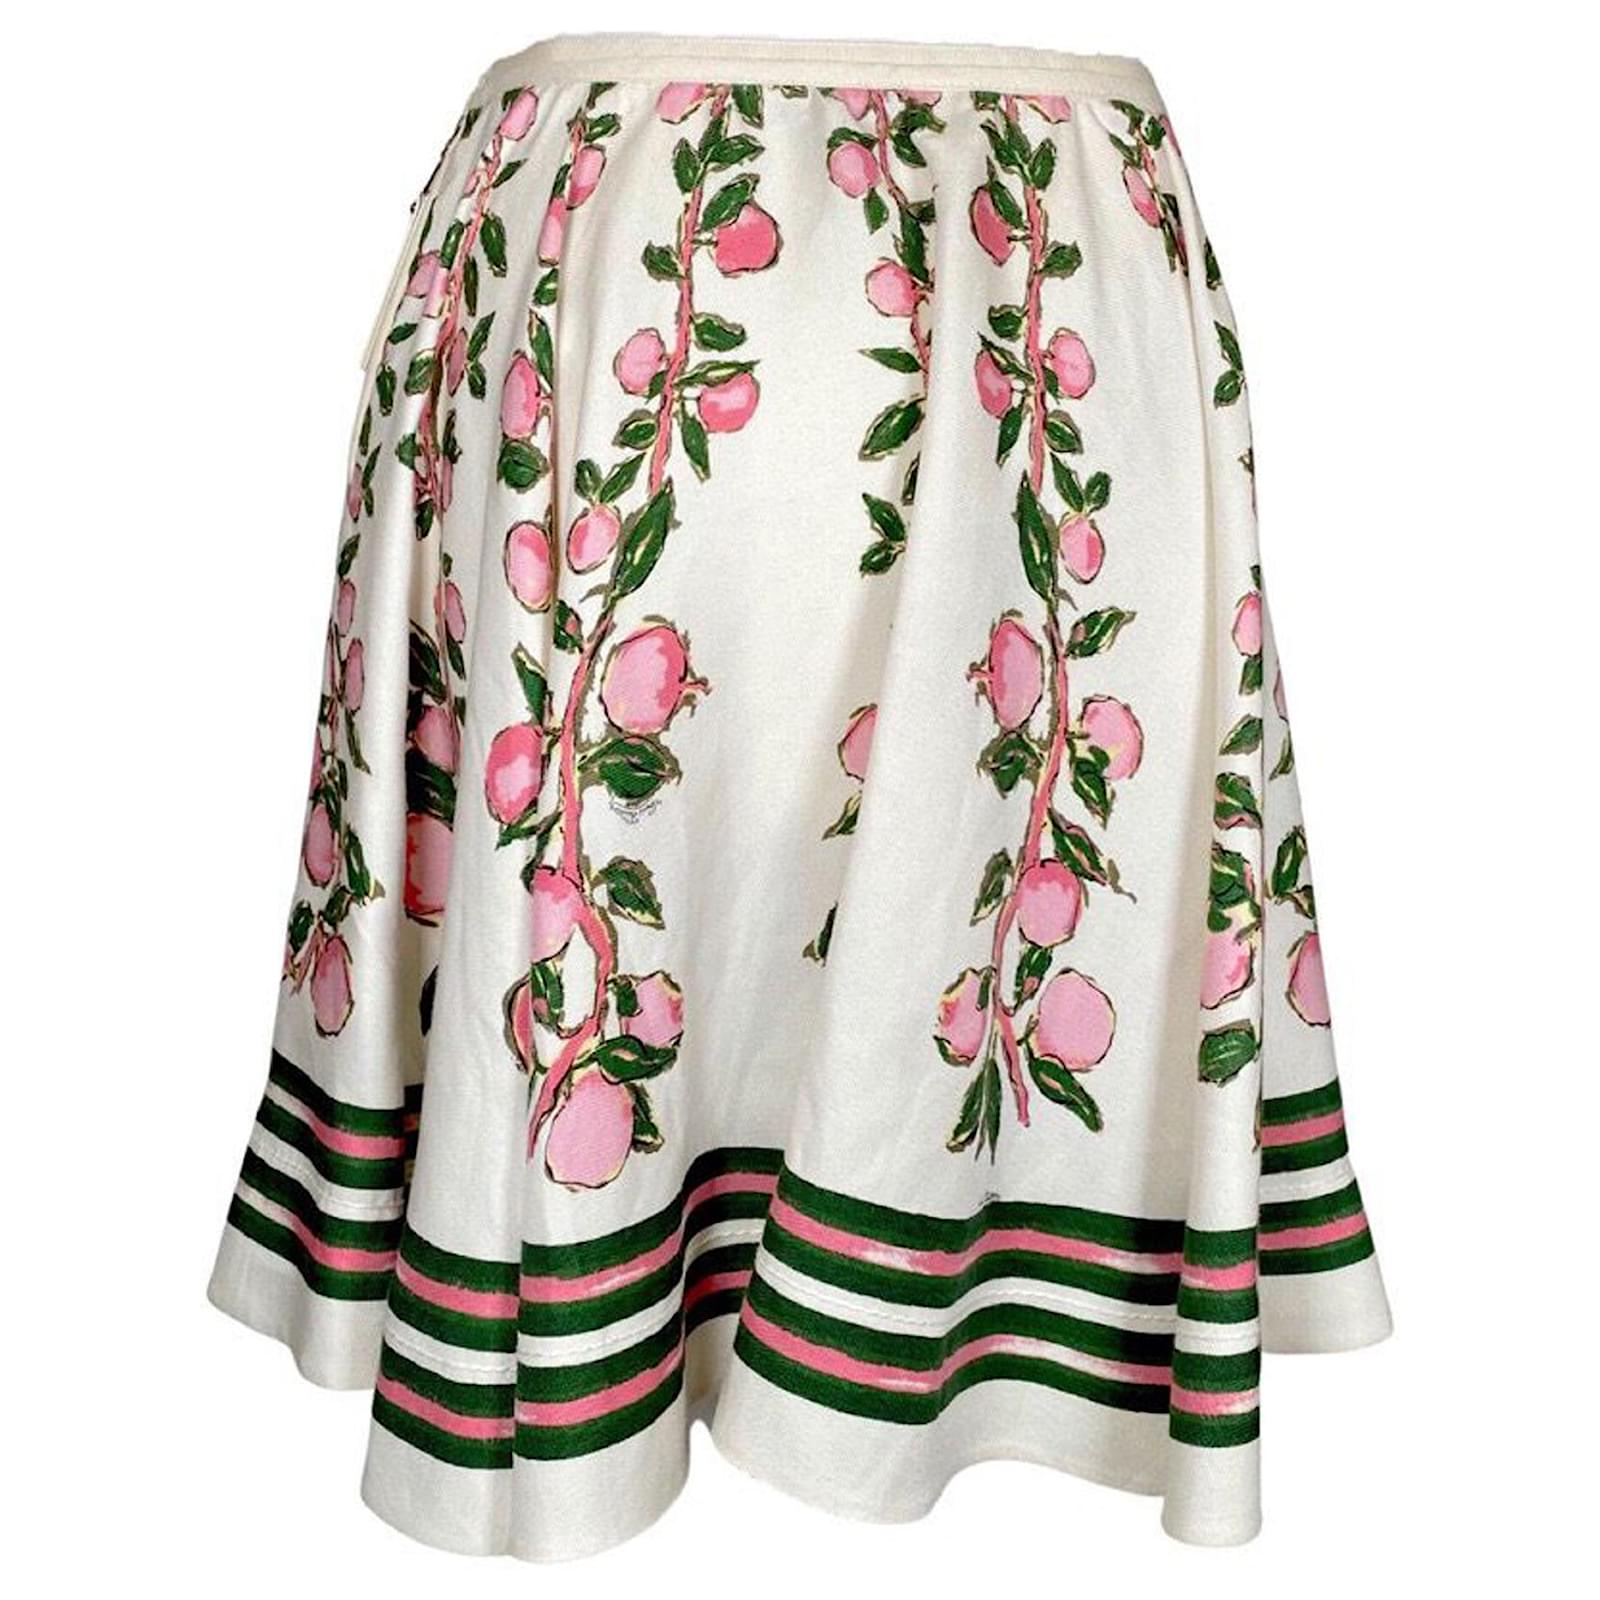 Louis Vuitton skirt in cream silk linen with pink flower print